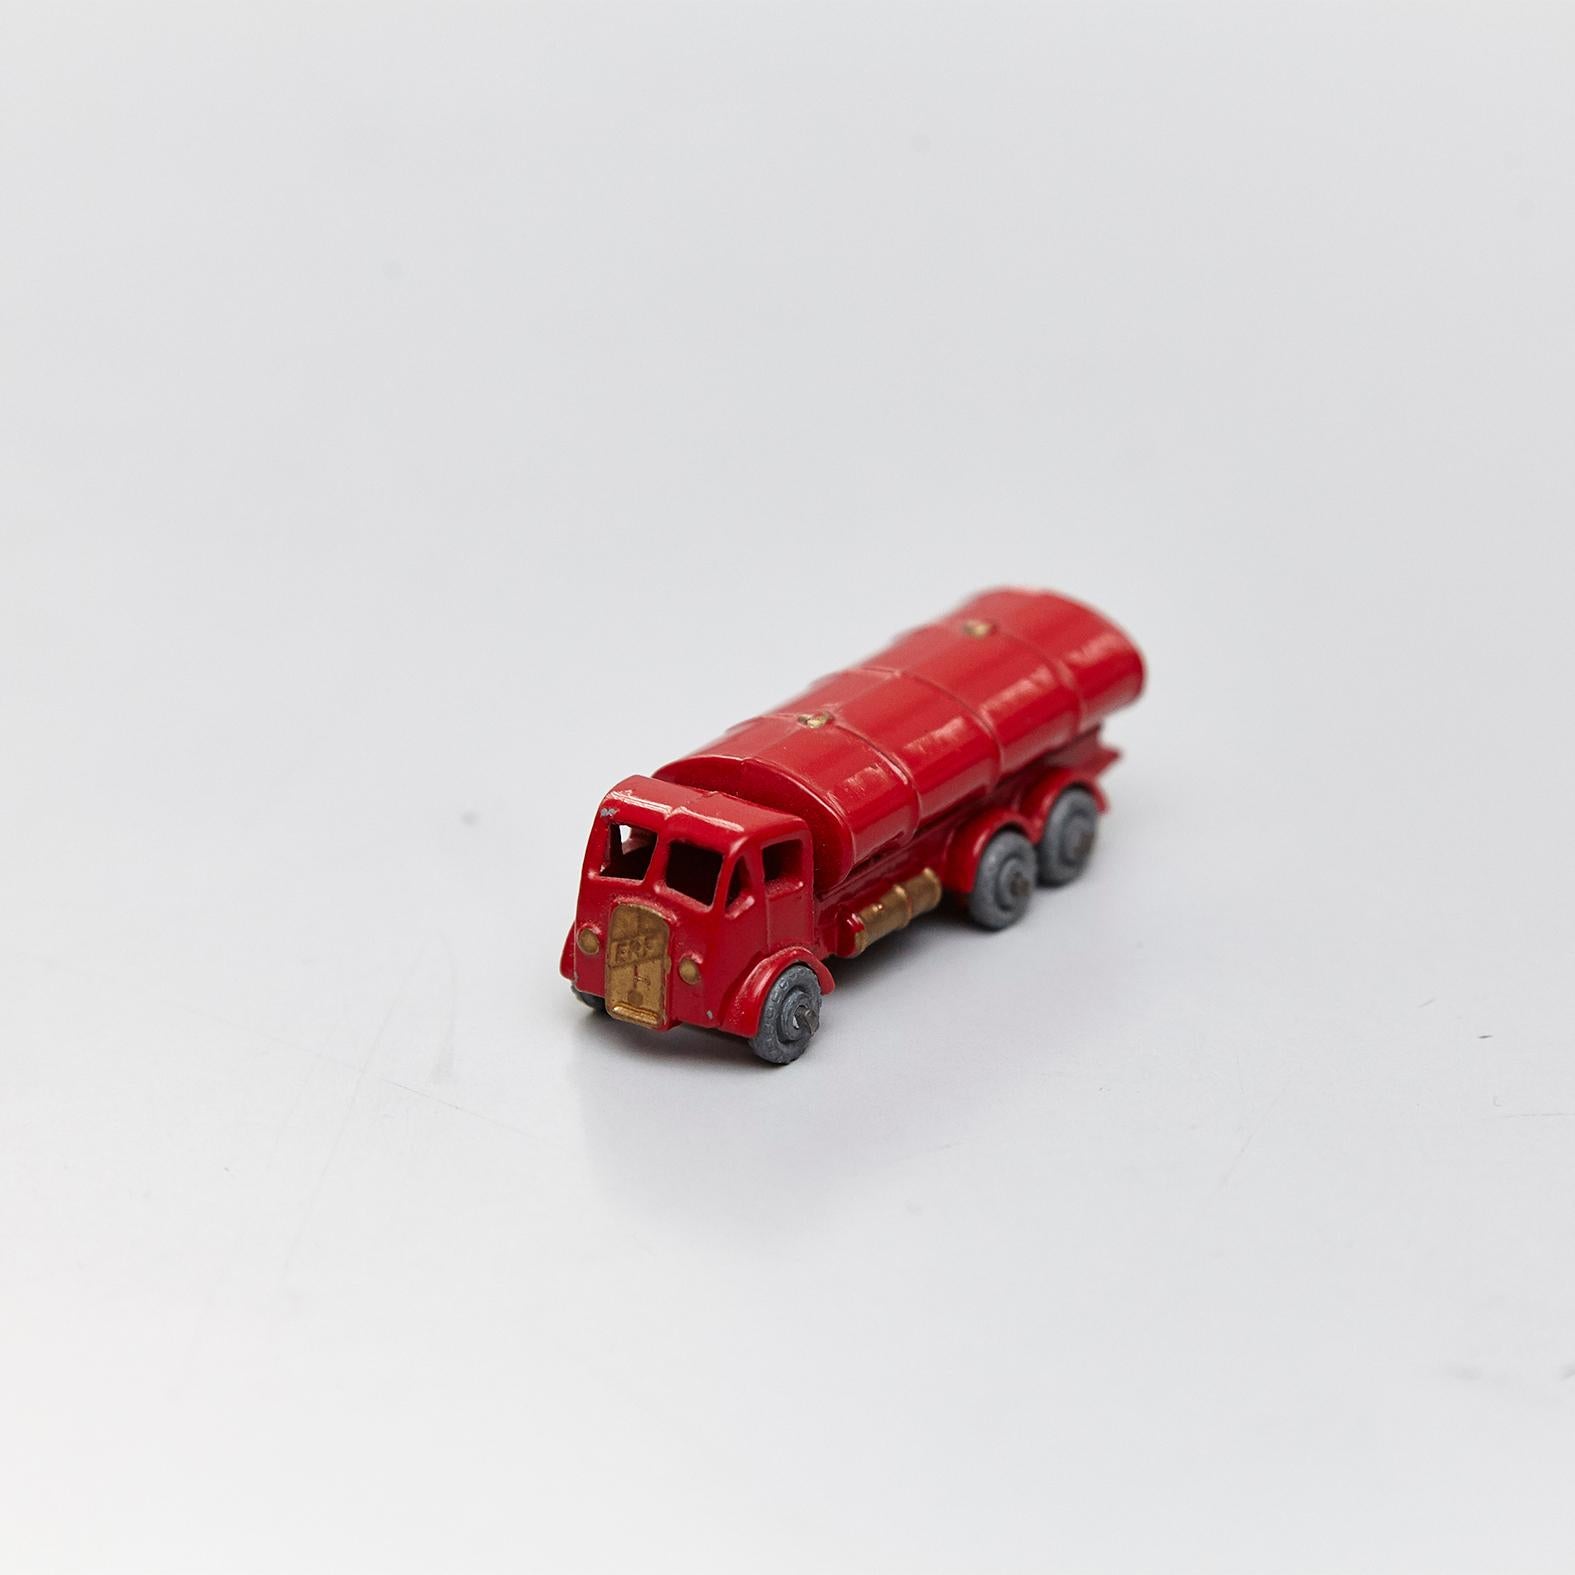 British Lesney Matchboxes Series Antique Metal Toy, Three Red Fire Trucks, circa 1950